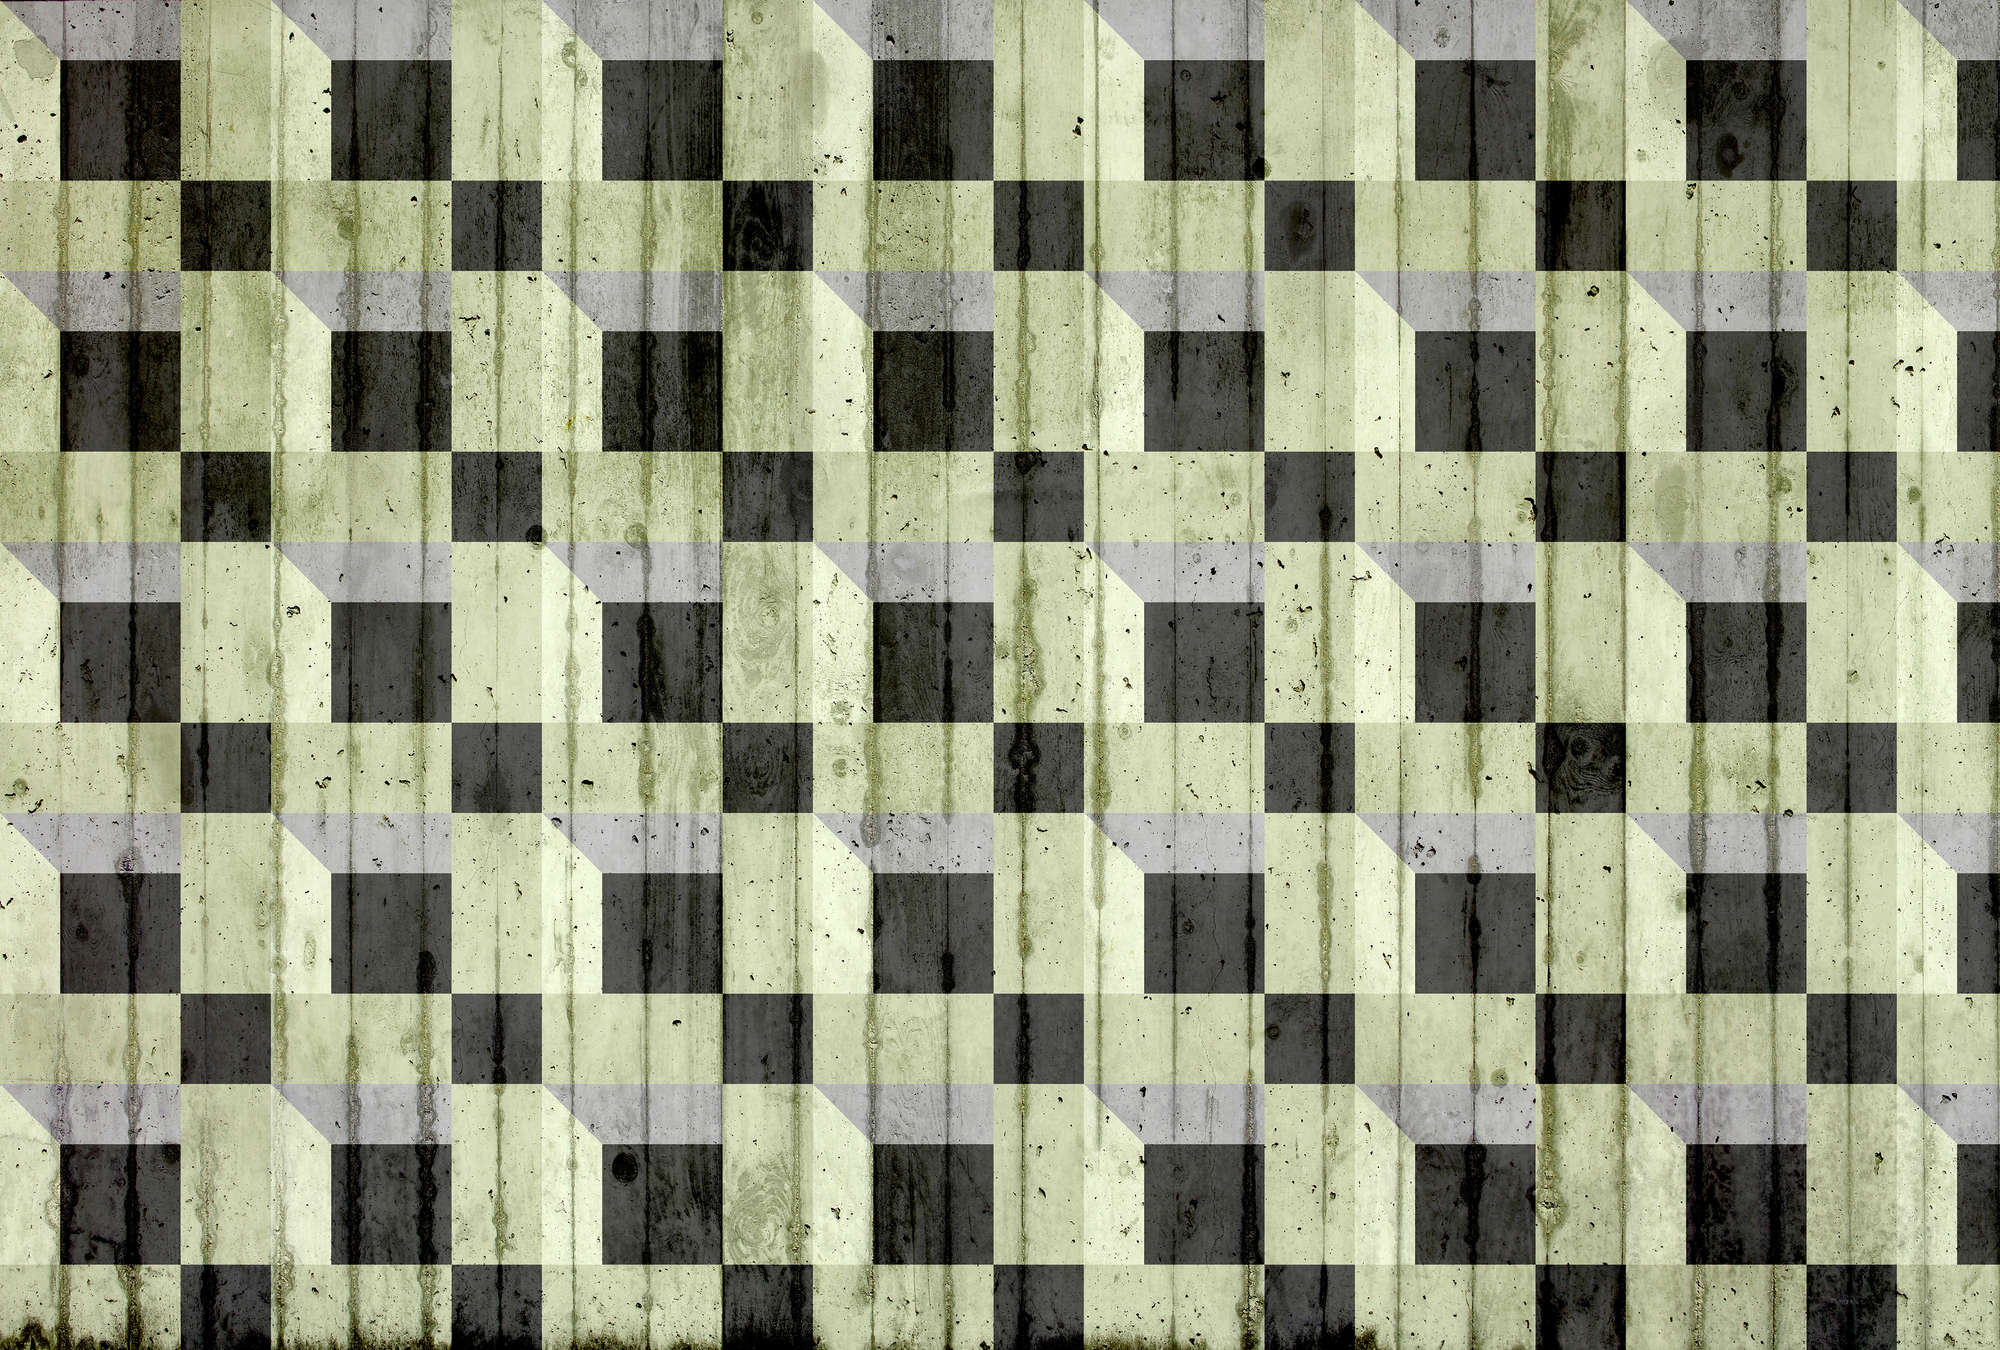             Fototapete Betonoptik & Quadrat-Muster – Grün, Schwarz, Grau
        